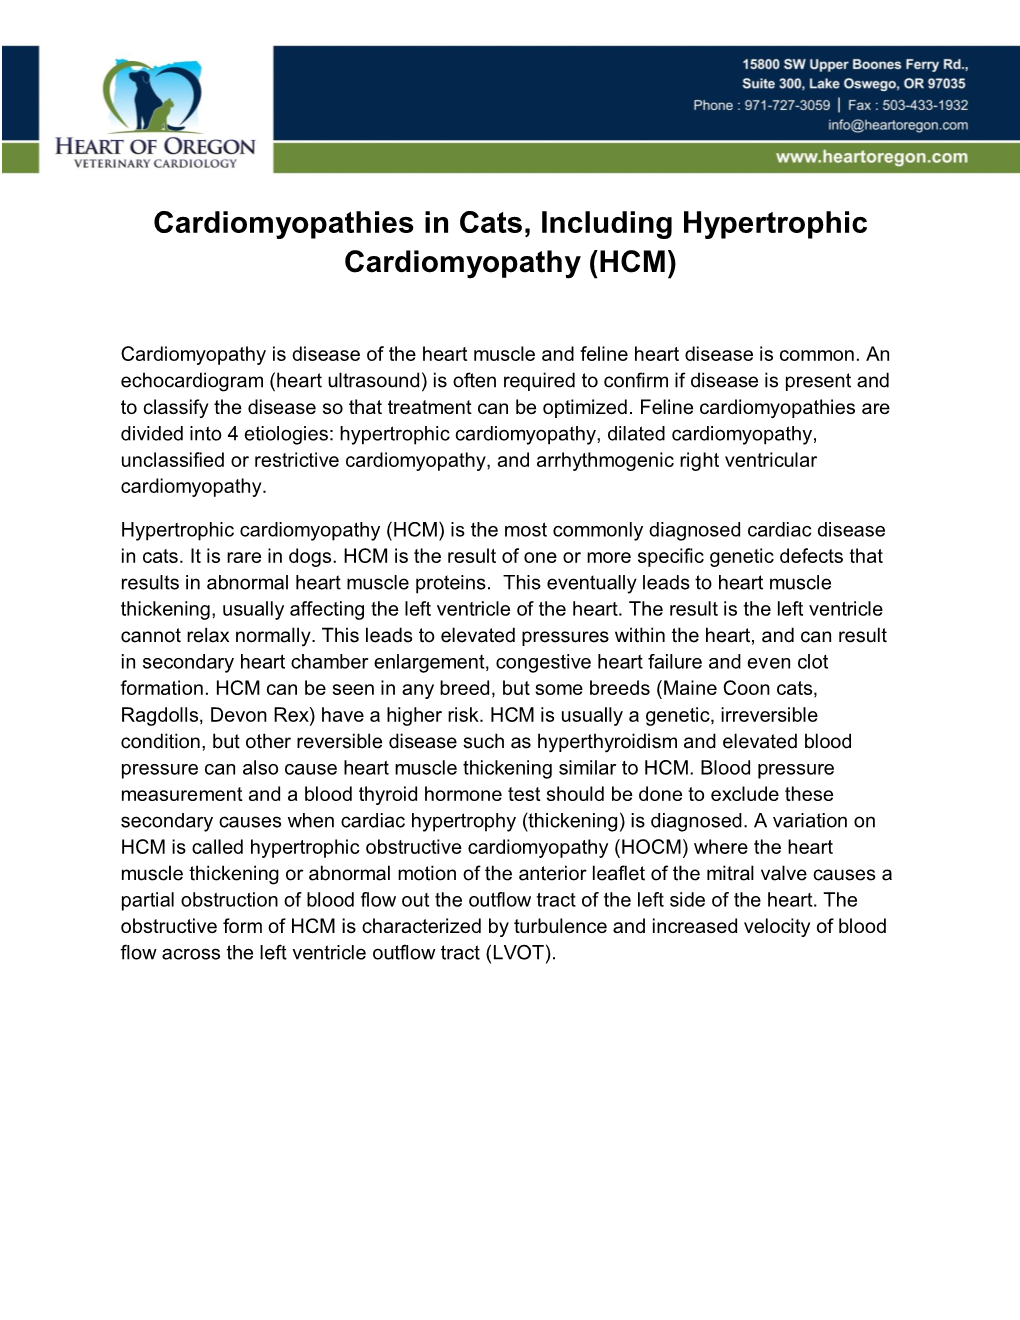 Cardiomyopathies in Cats, Including Hypertrophic Cardiomyopathy (HCM)